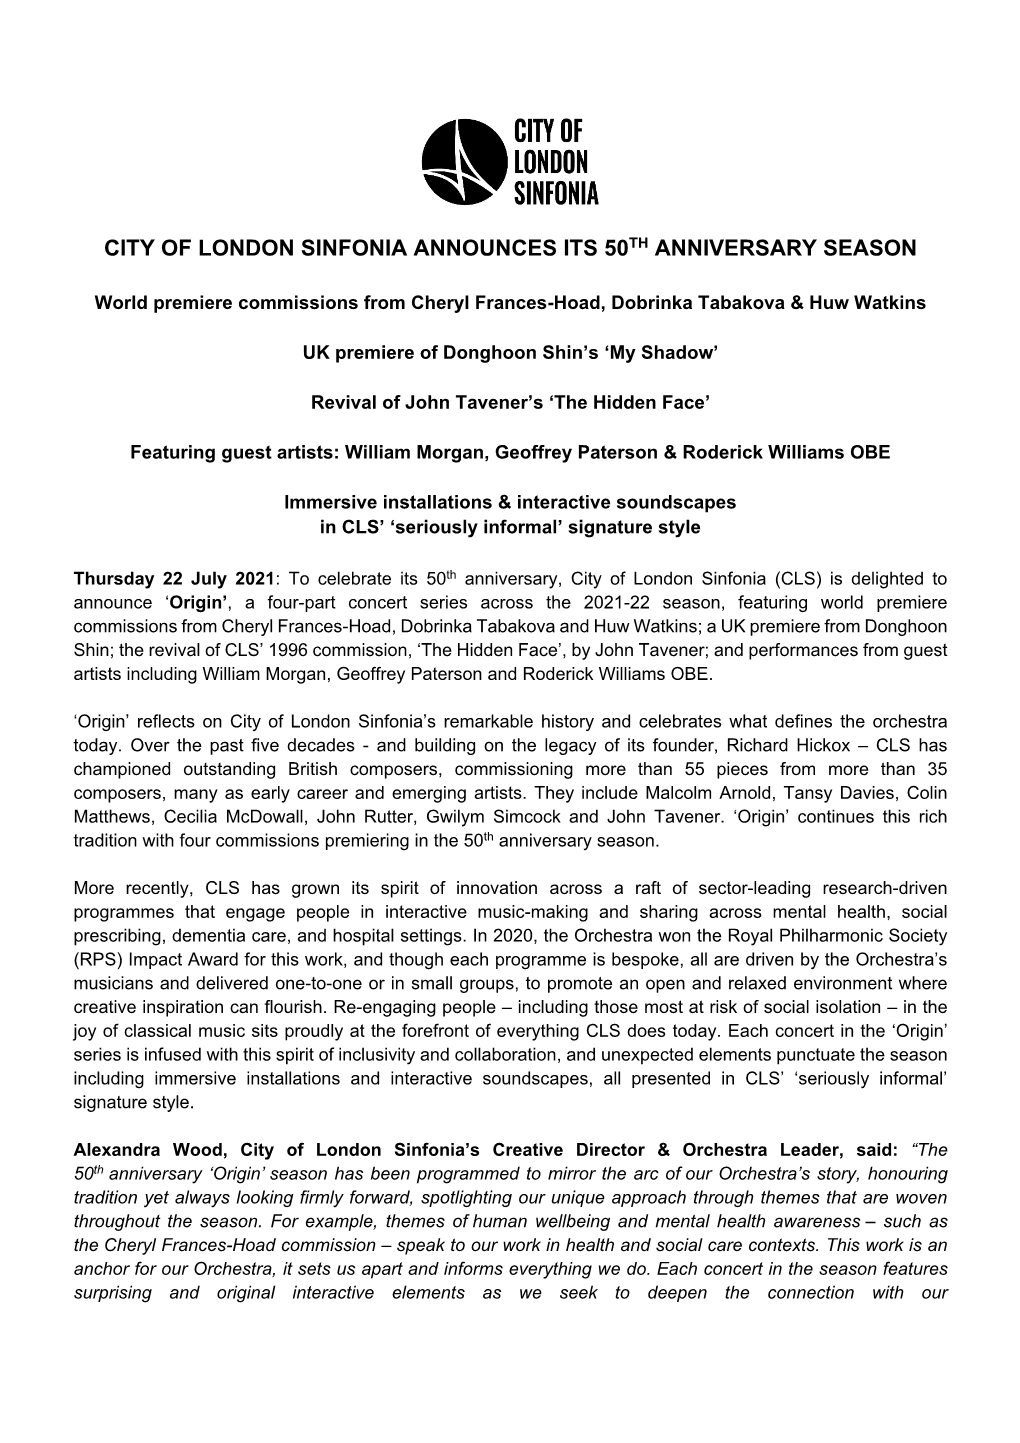 City of London Sinfonia Announces Its 50Th Anniversary Season